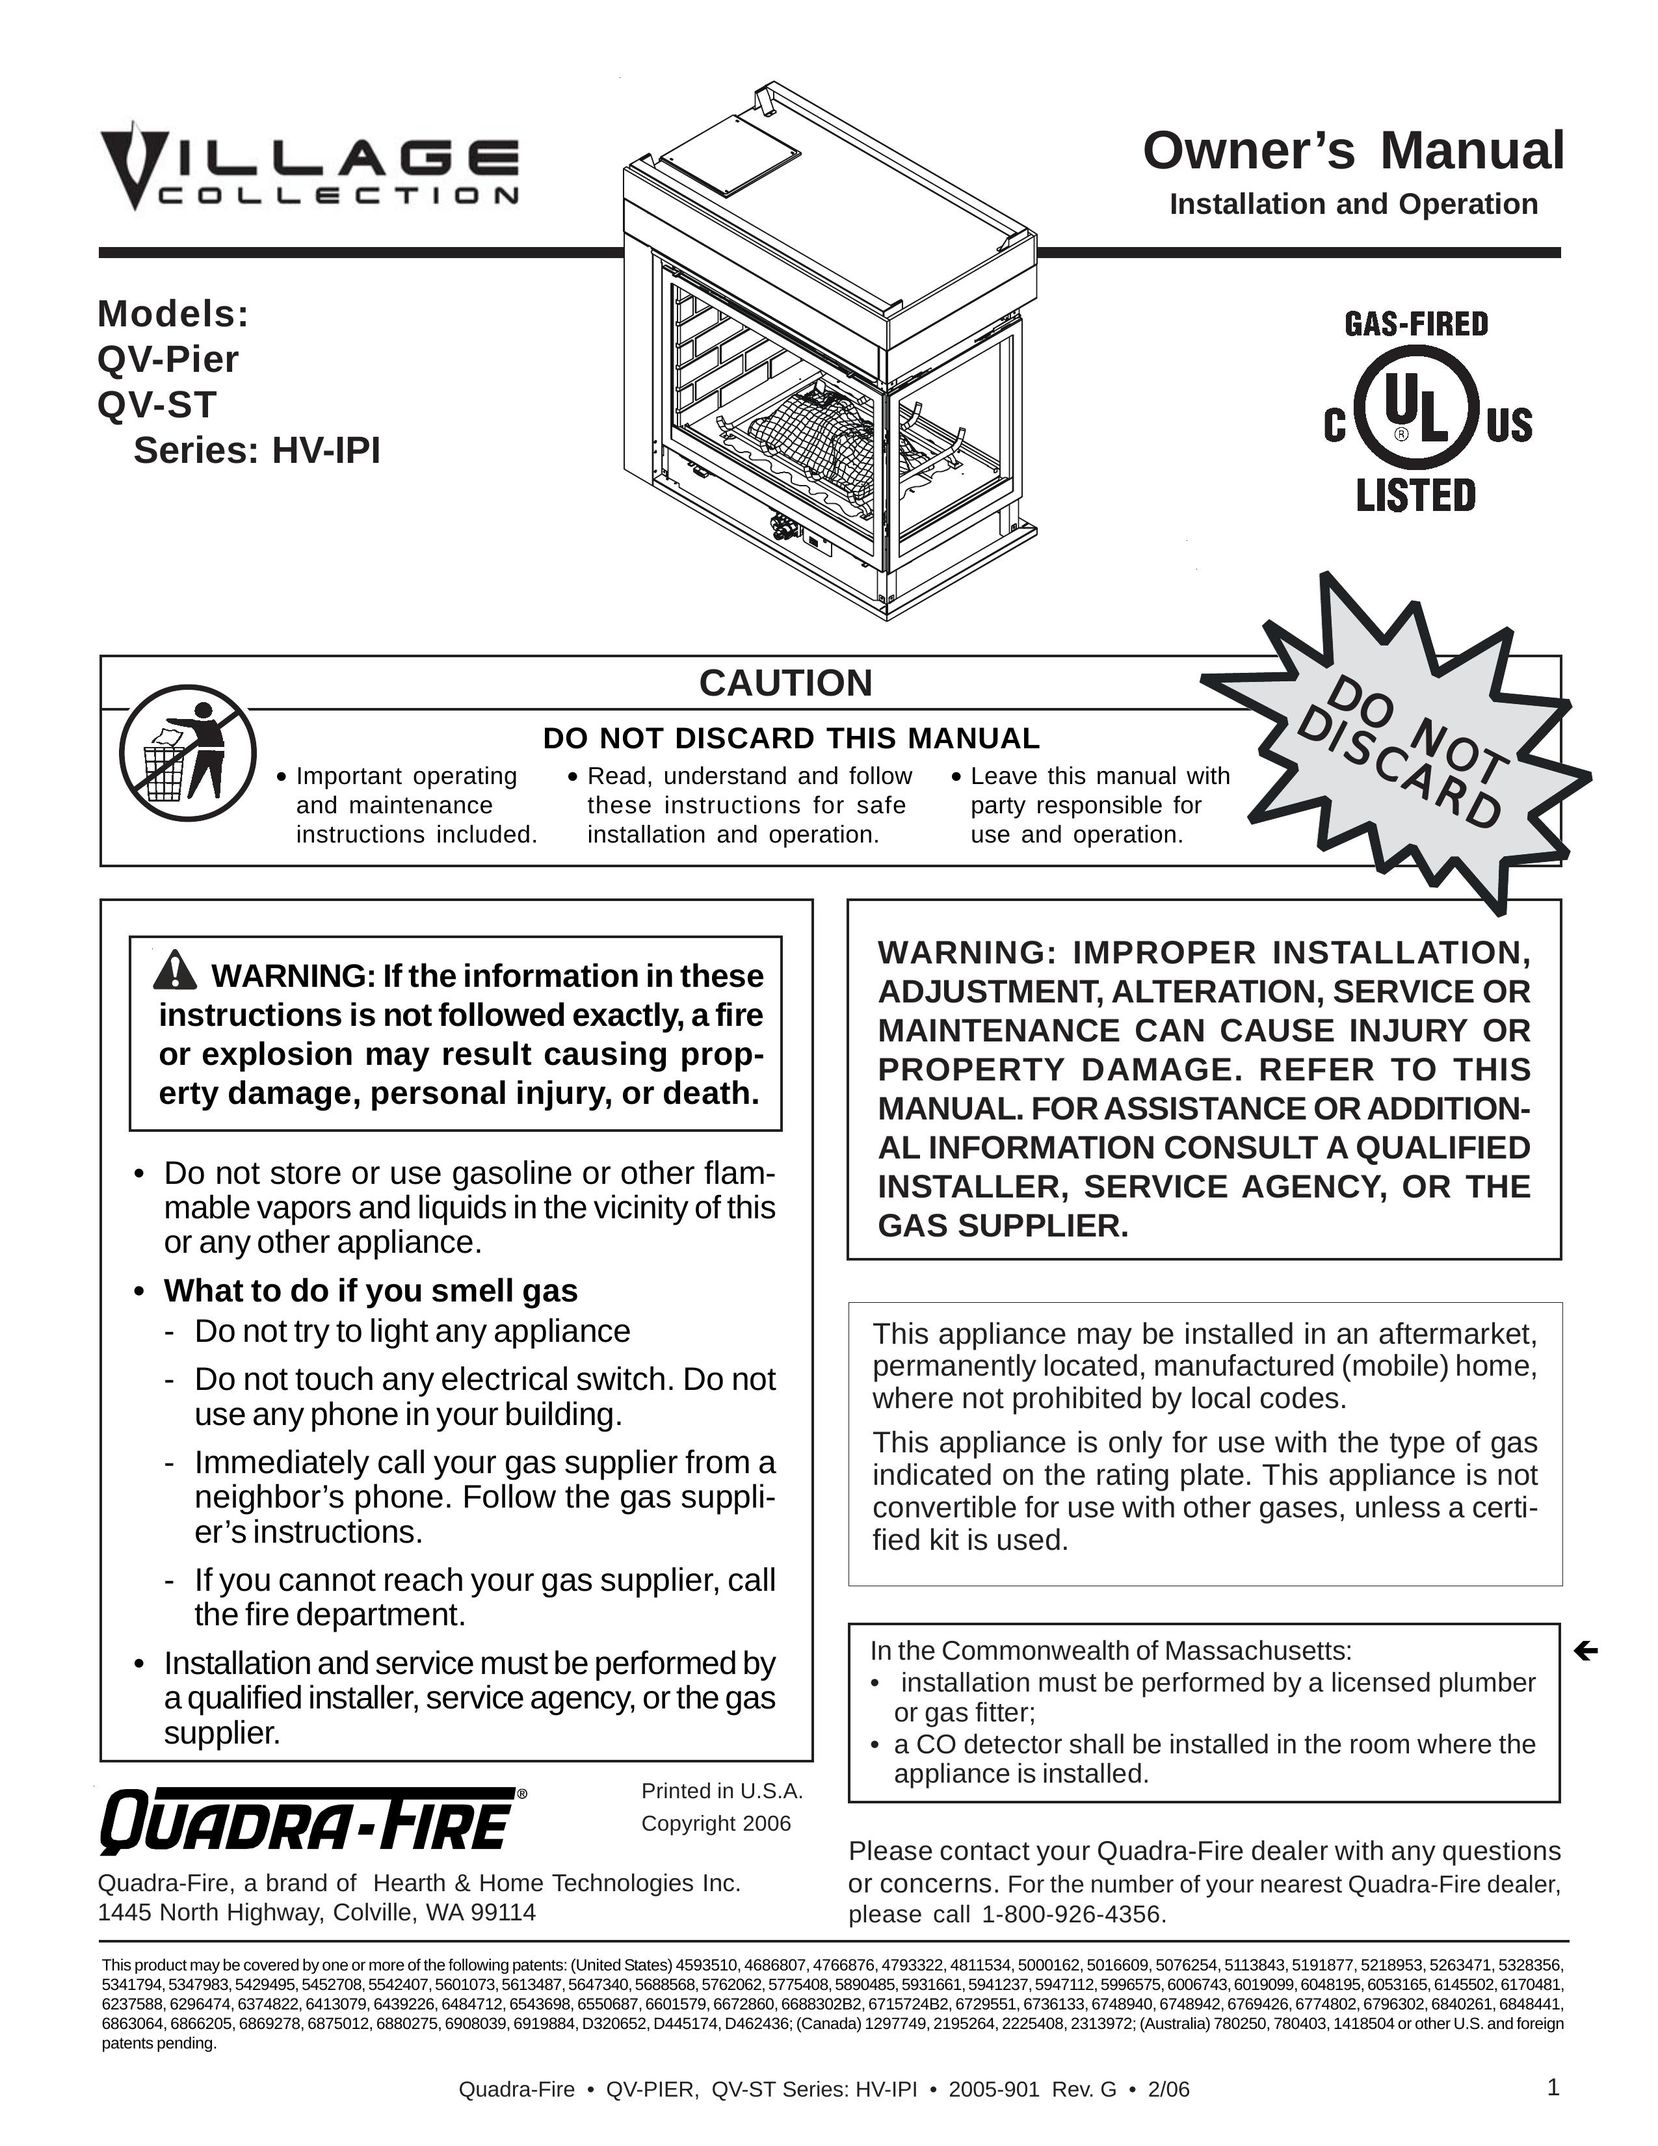 Quadra-Fire QV-PIER Indoor Fireplace User Manual